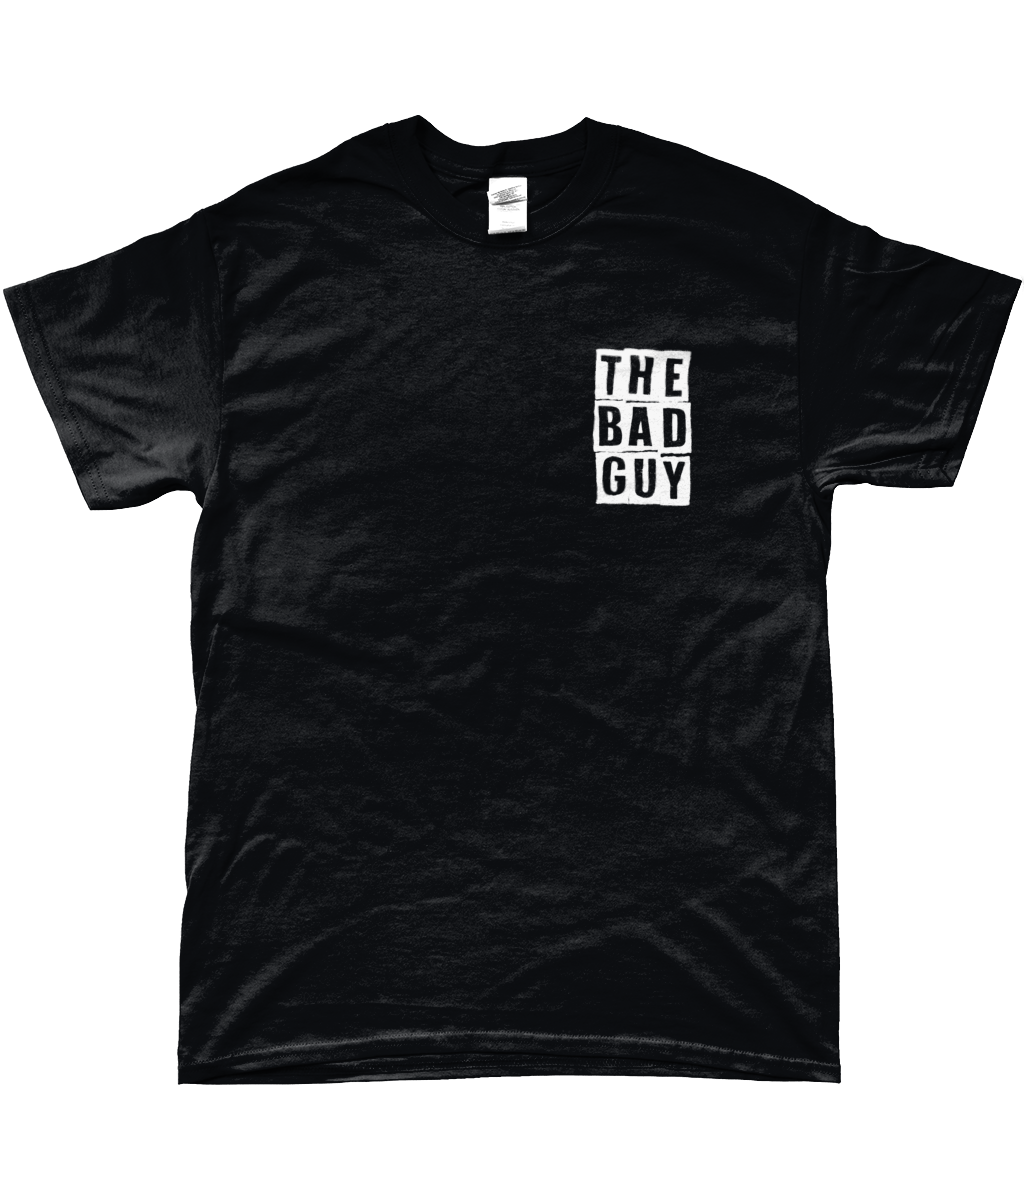 The Bad Guy Logo on Pocket (Black)